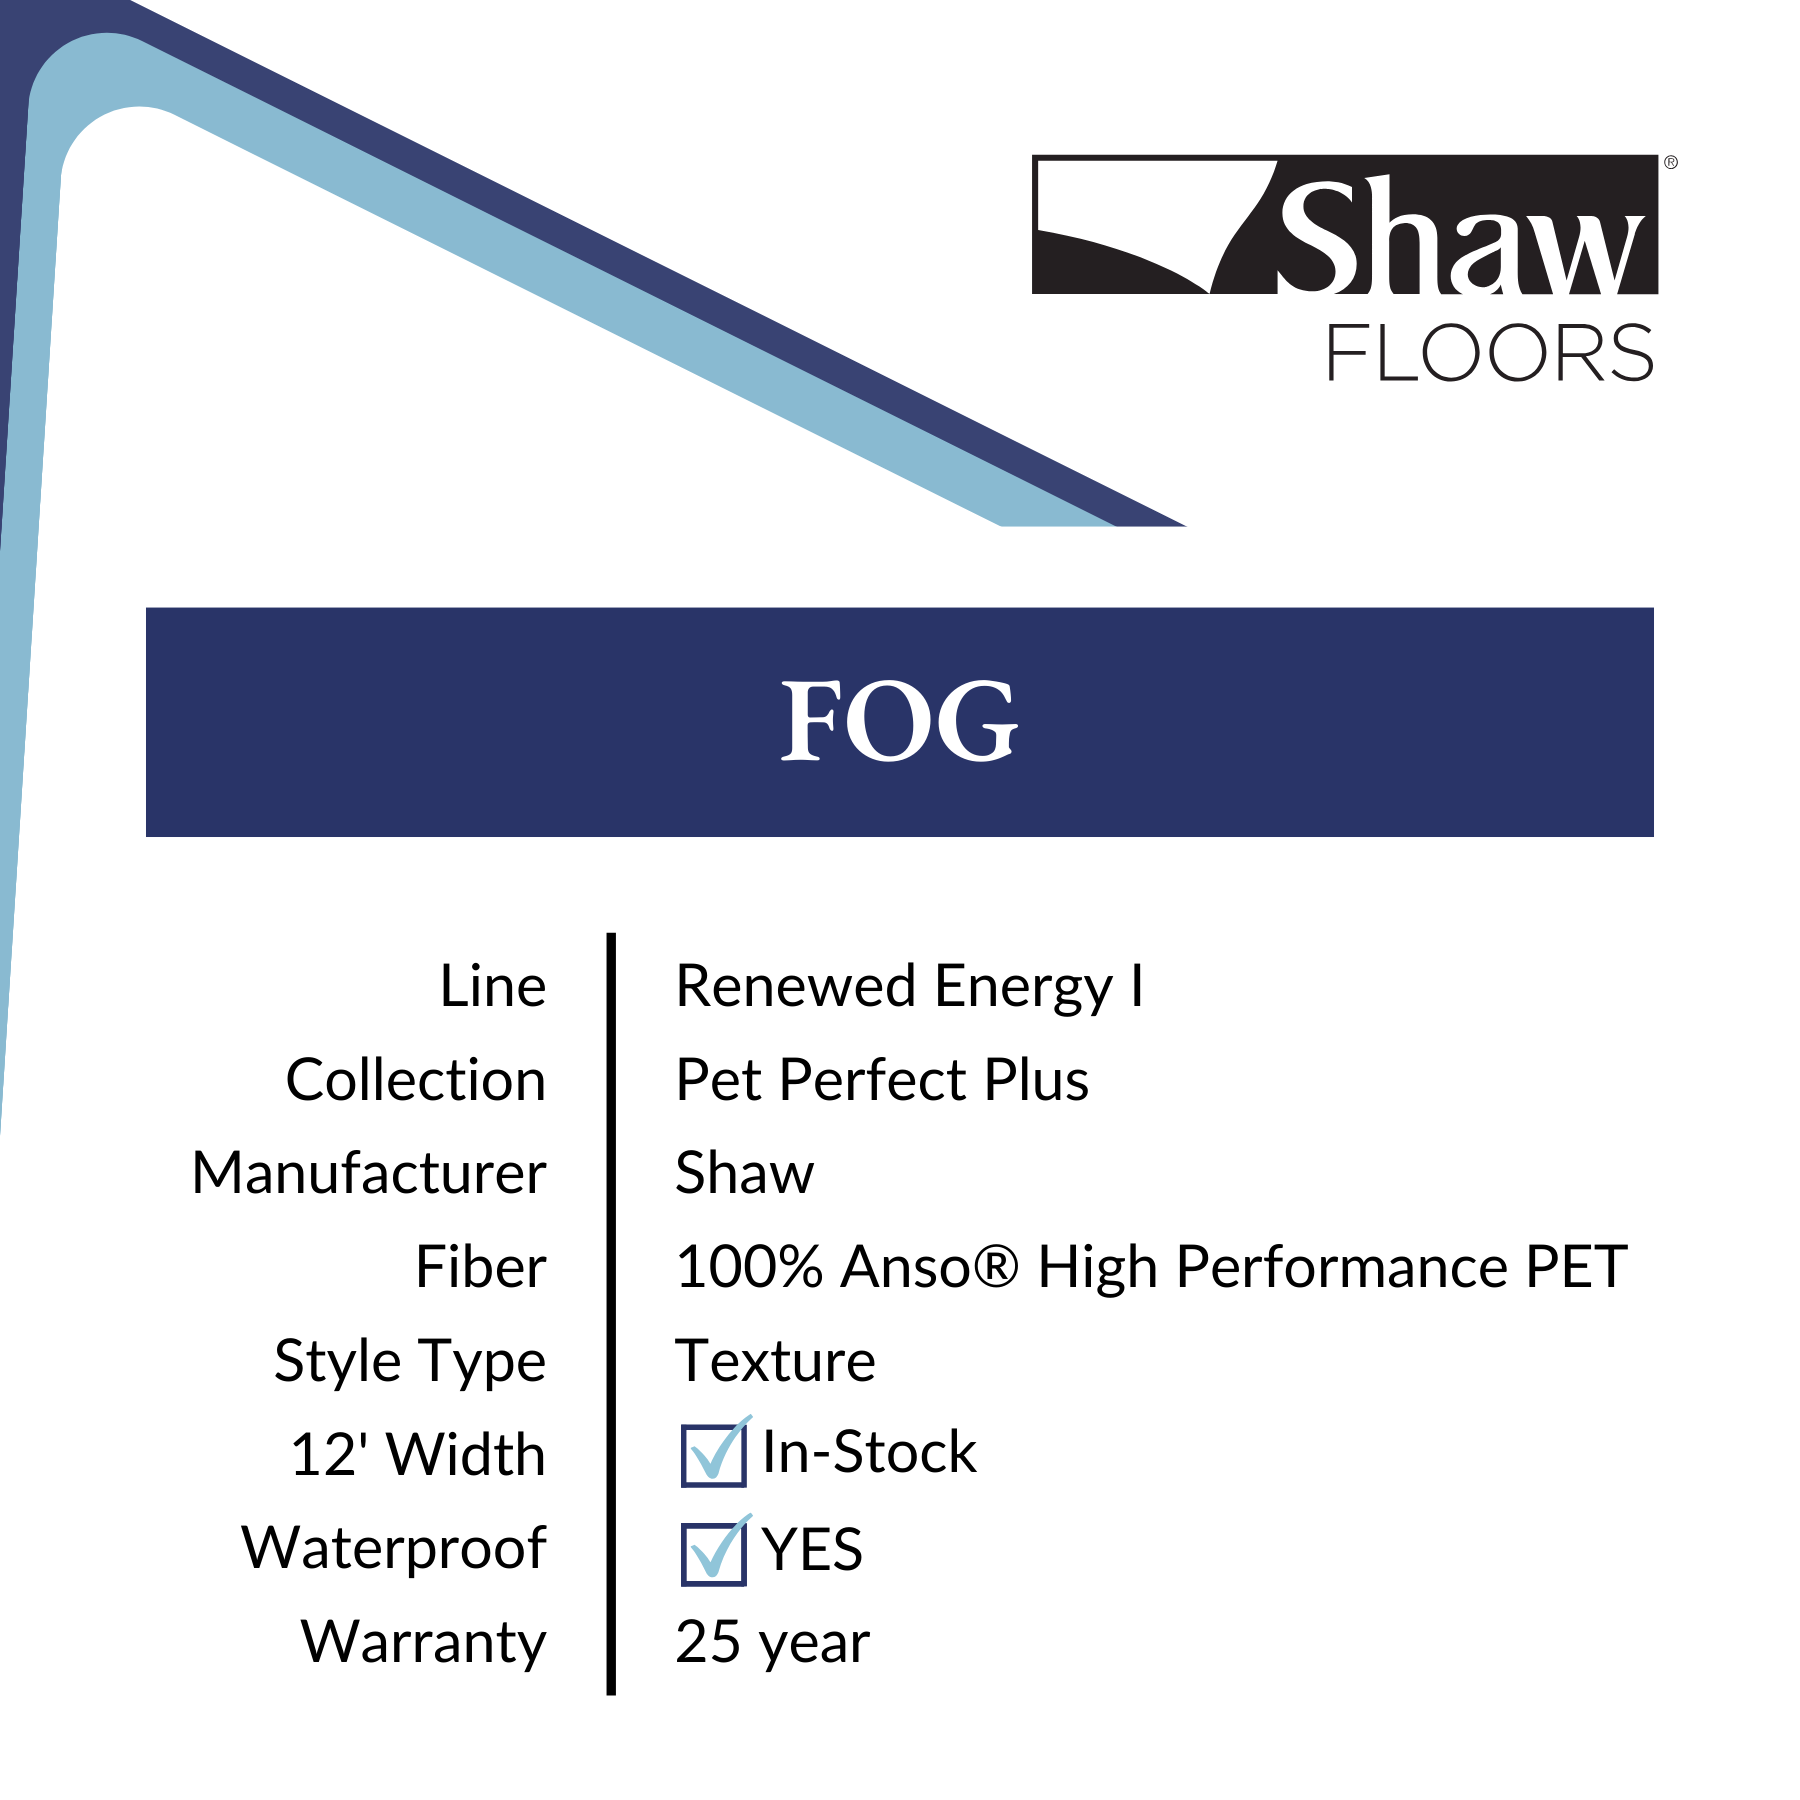 Fog Carpet by Shaw Pet Perfect Plus Renewed Energy I Calhoun's Flooring Specs